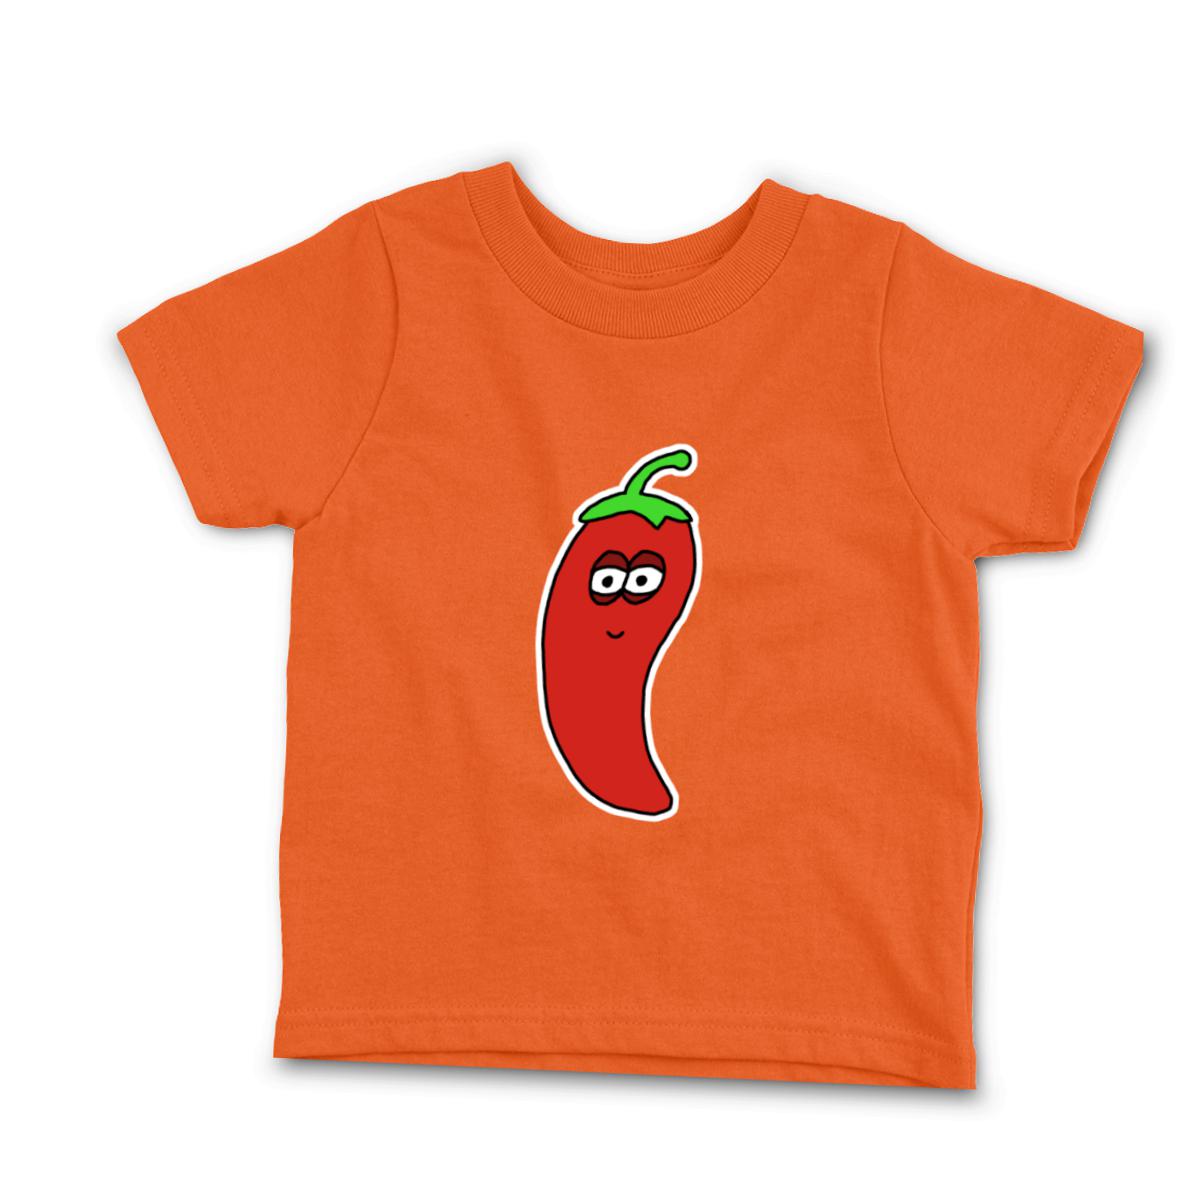 Chili Pepper Toddler Tee 4T orange